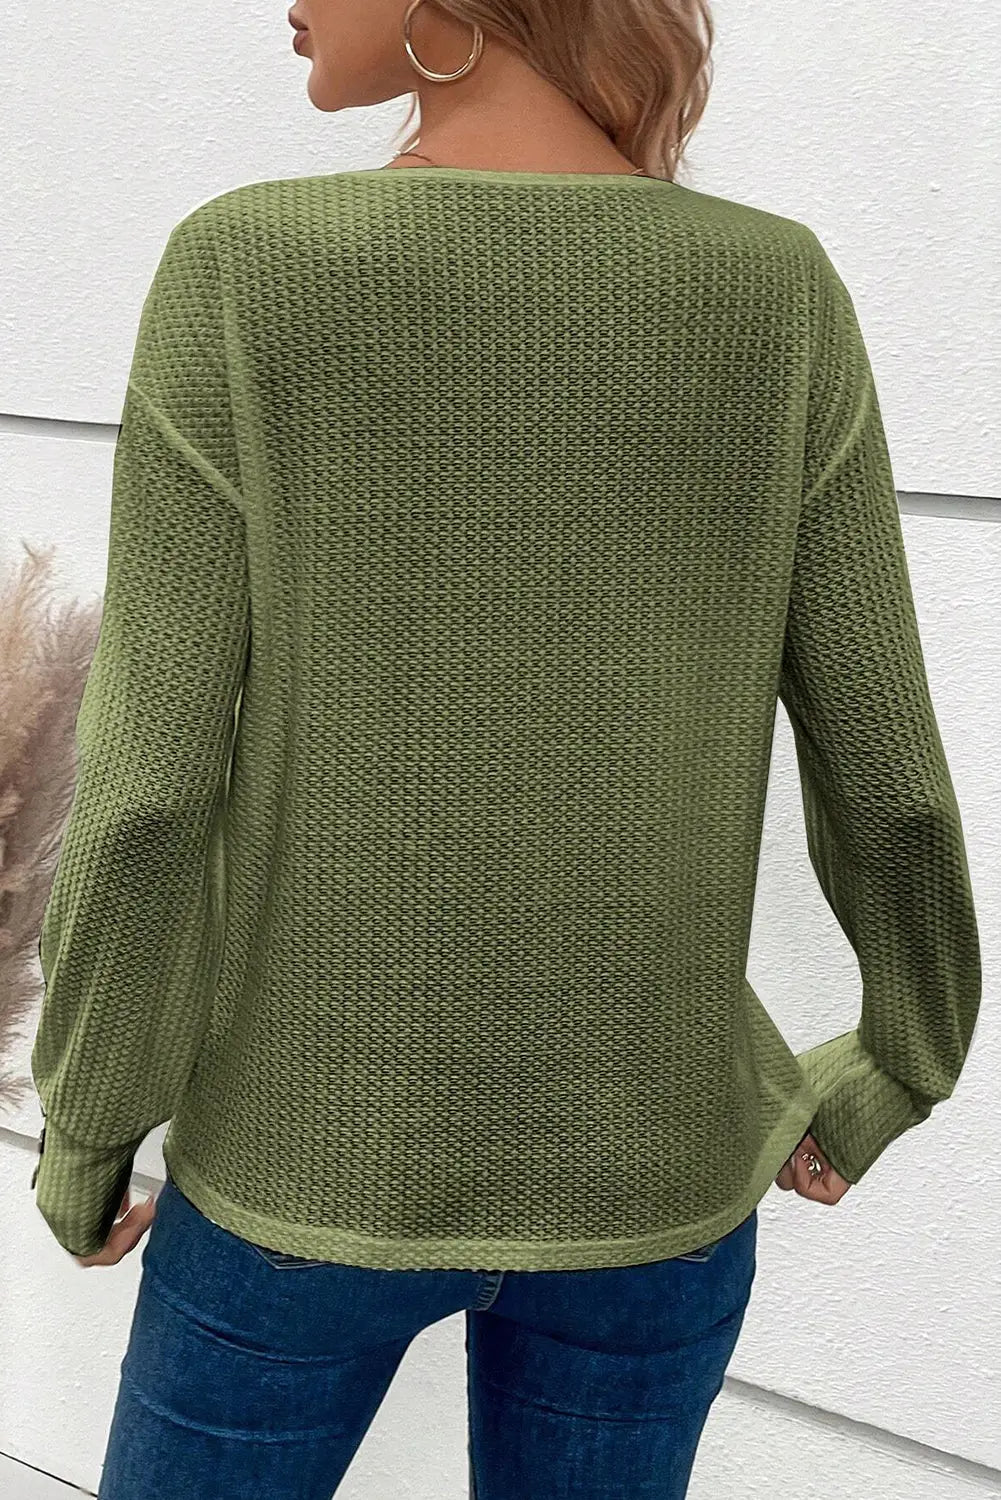 Jungle green textured knit v neck button cuffs long sleeve top - tops